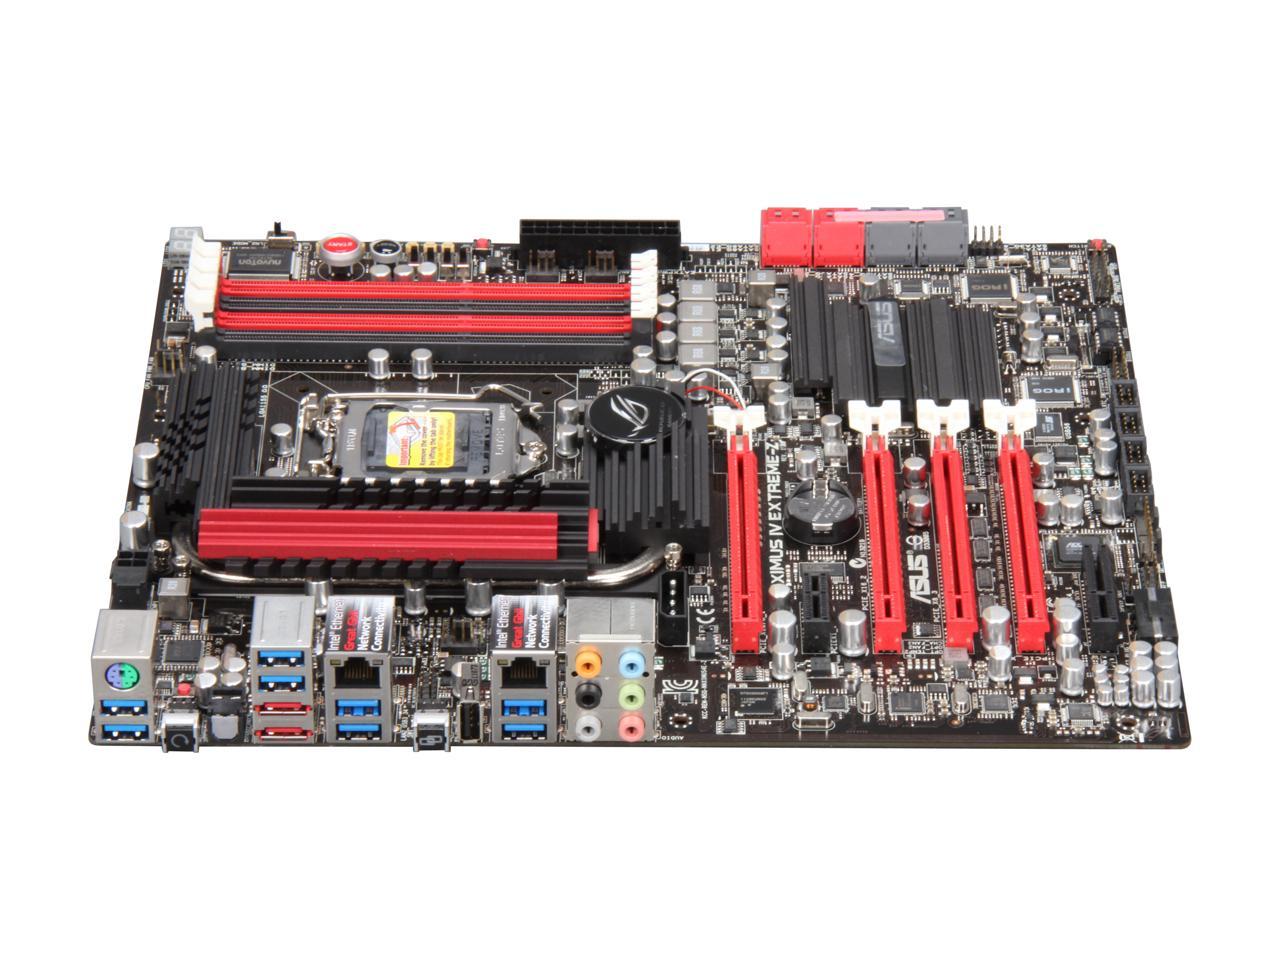 ASUS Maximus IV Extreme-Z LGA 1155 Intel Z68 SATA 6Gb/s USB 3.0 Extended ATX Intel Motherboard